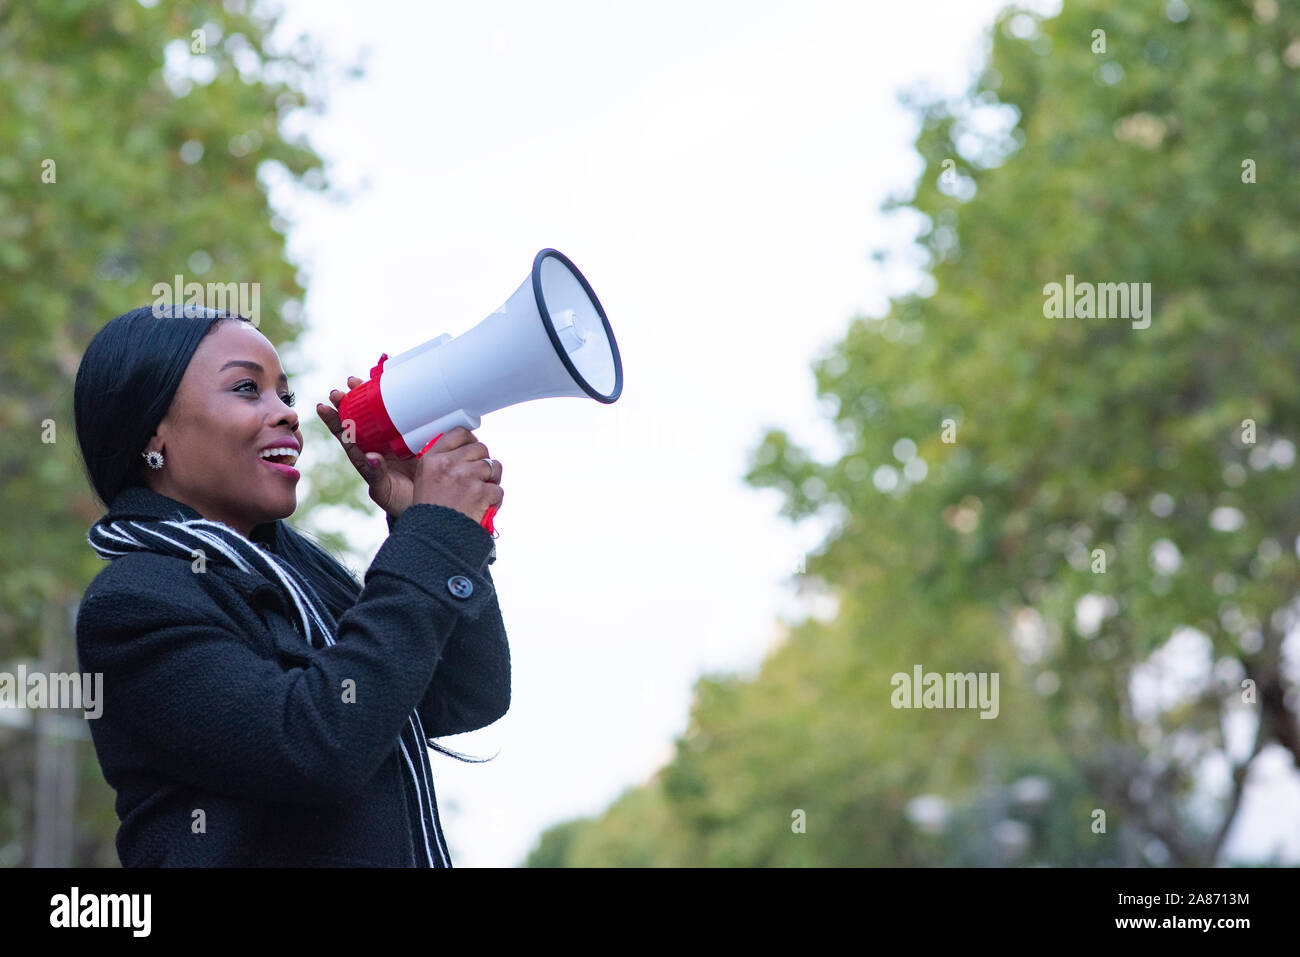 Mujer afroamericana  se comunica gritando fuerte sosteniendo un megáfono, expresando éxito y concepto positivo, idea para marketing o ventas. Stock Photo